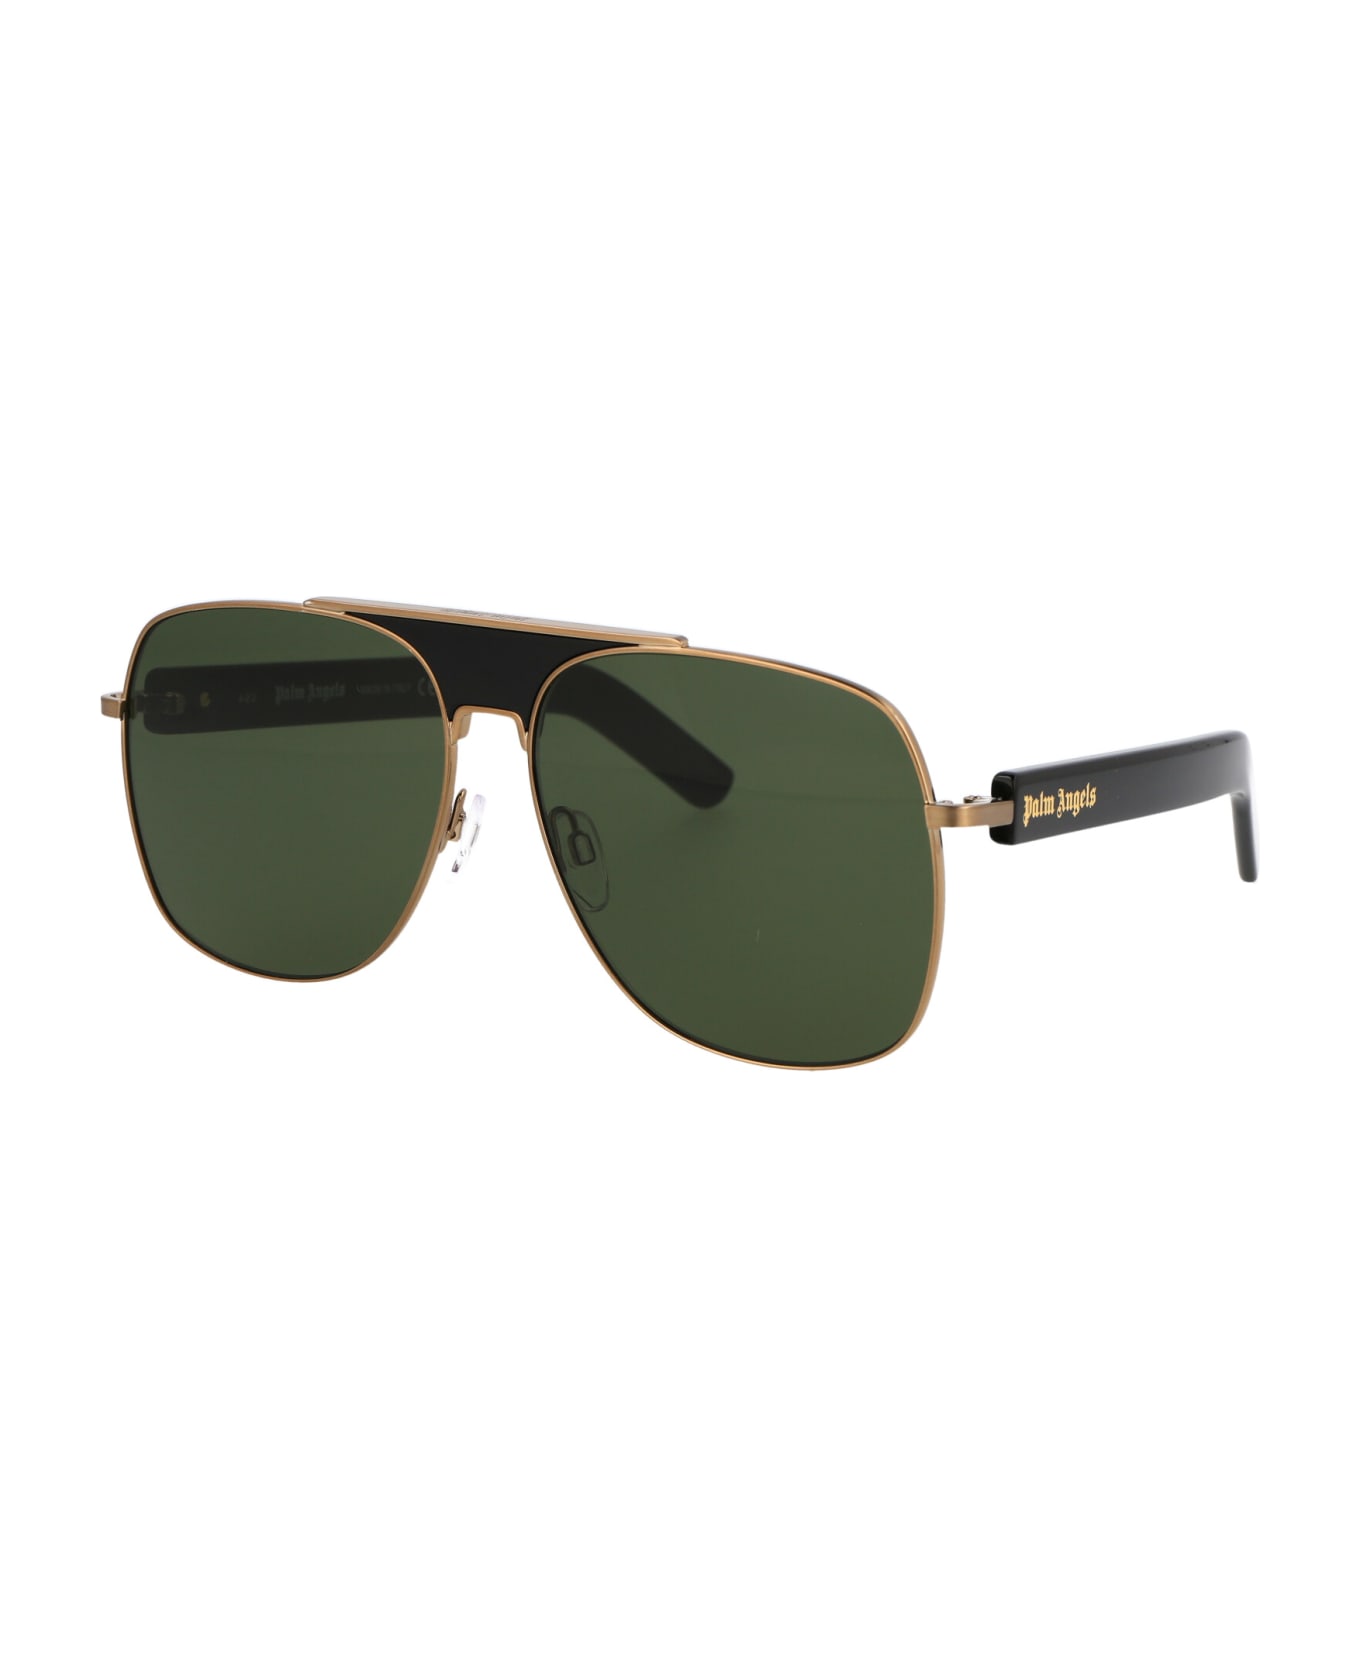 Palm Angels Bay Sunglasses - 1055 BLACK サングラス